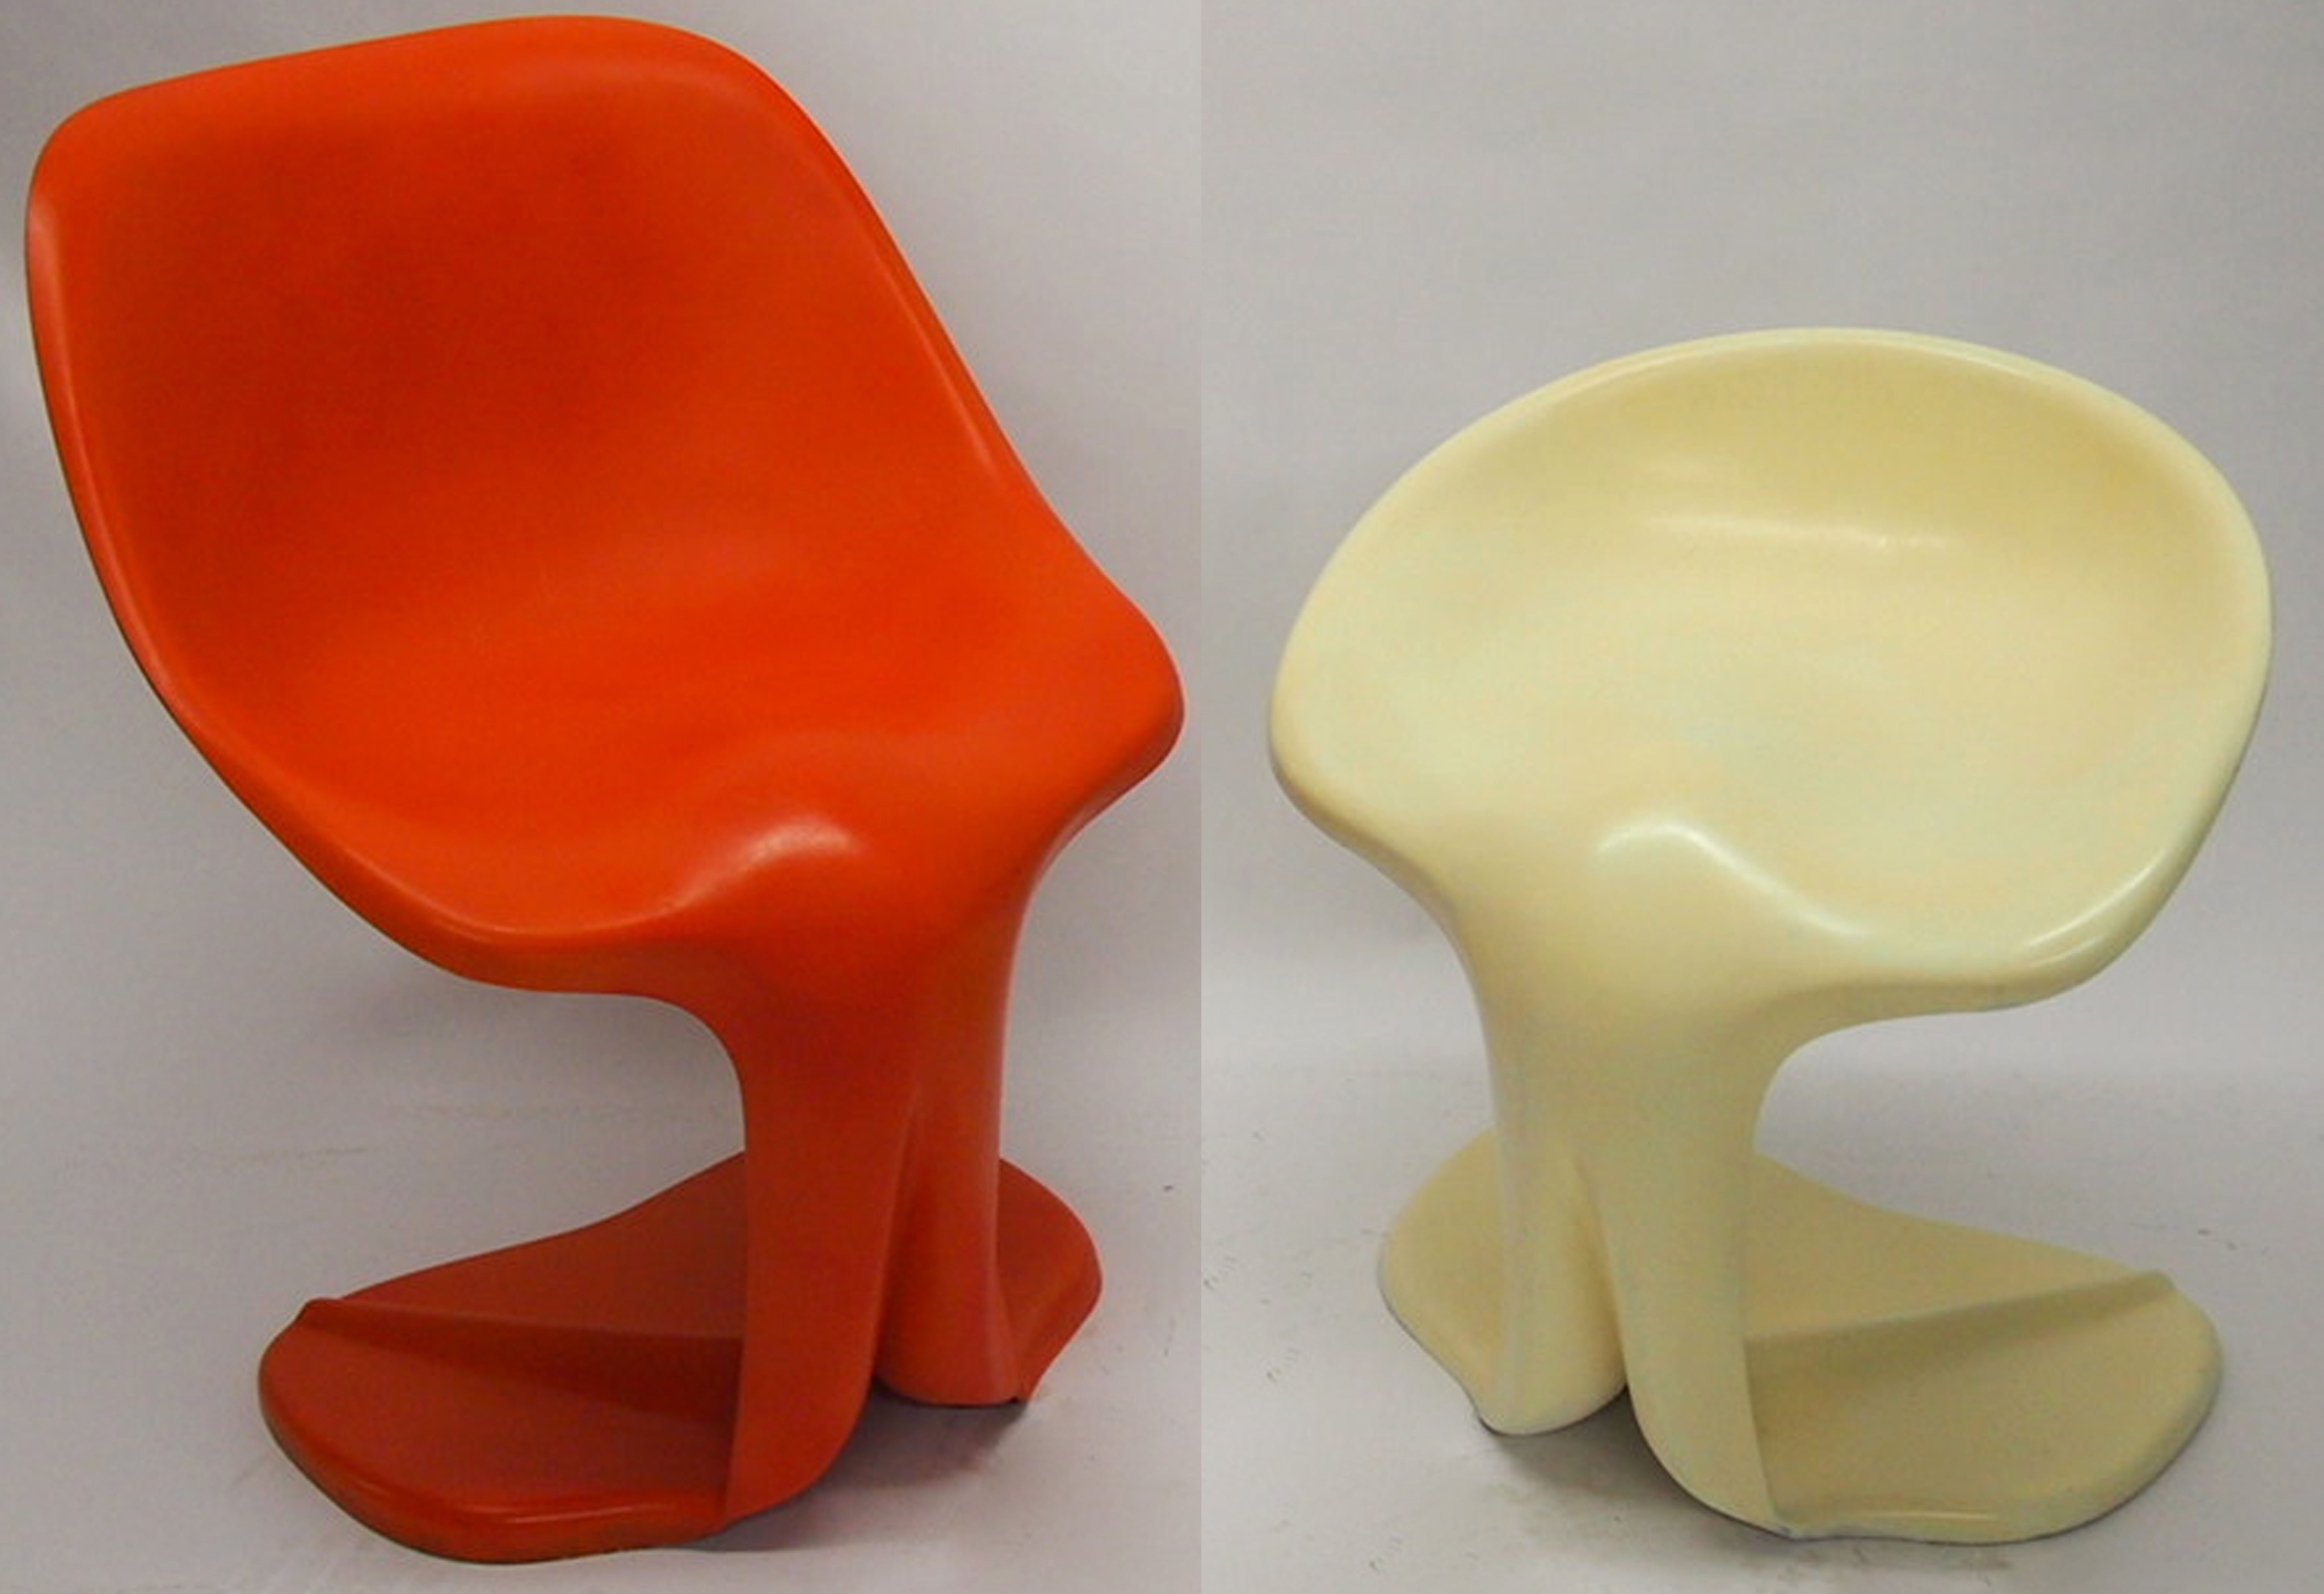 Chairs by Jean Dudon 1970 France "La Cote du Design" by Jean-Michel Homo pg. 212